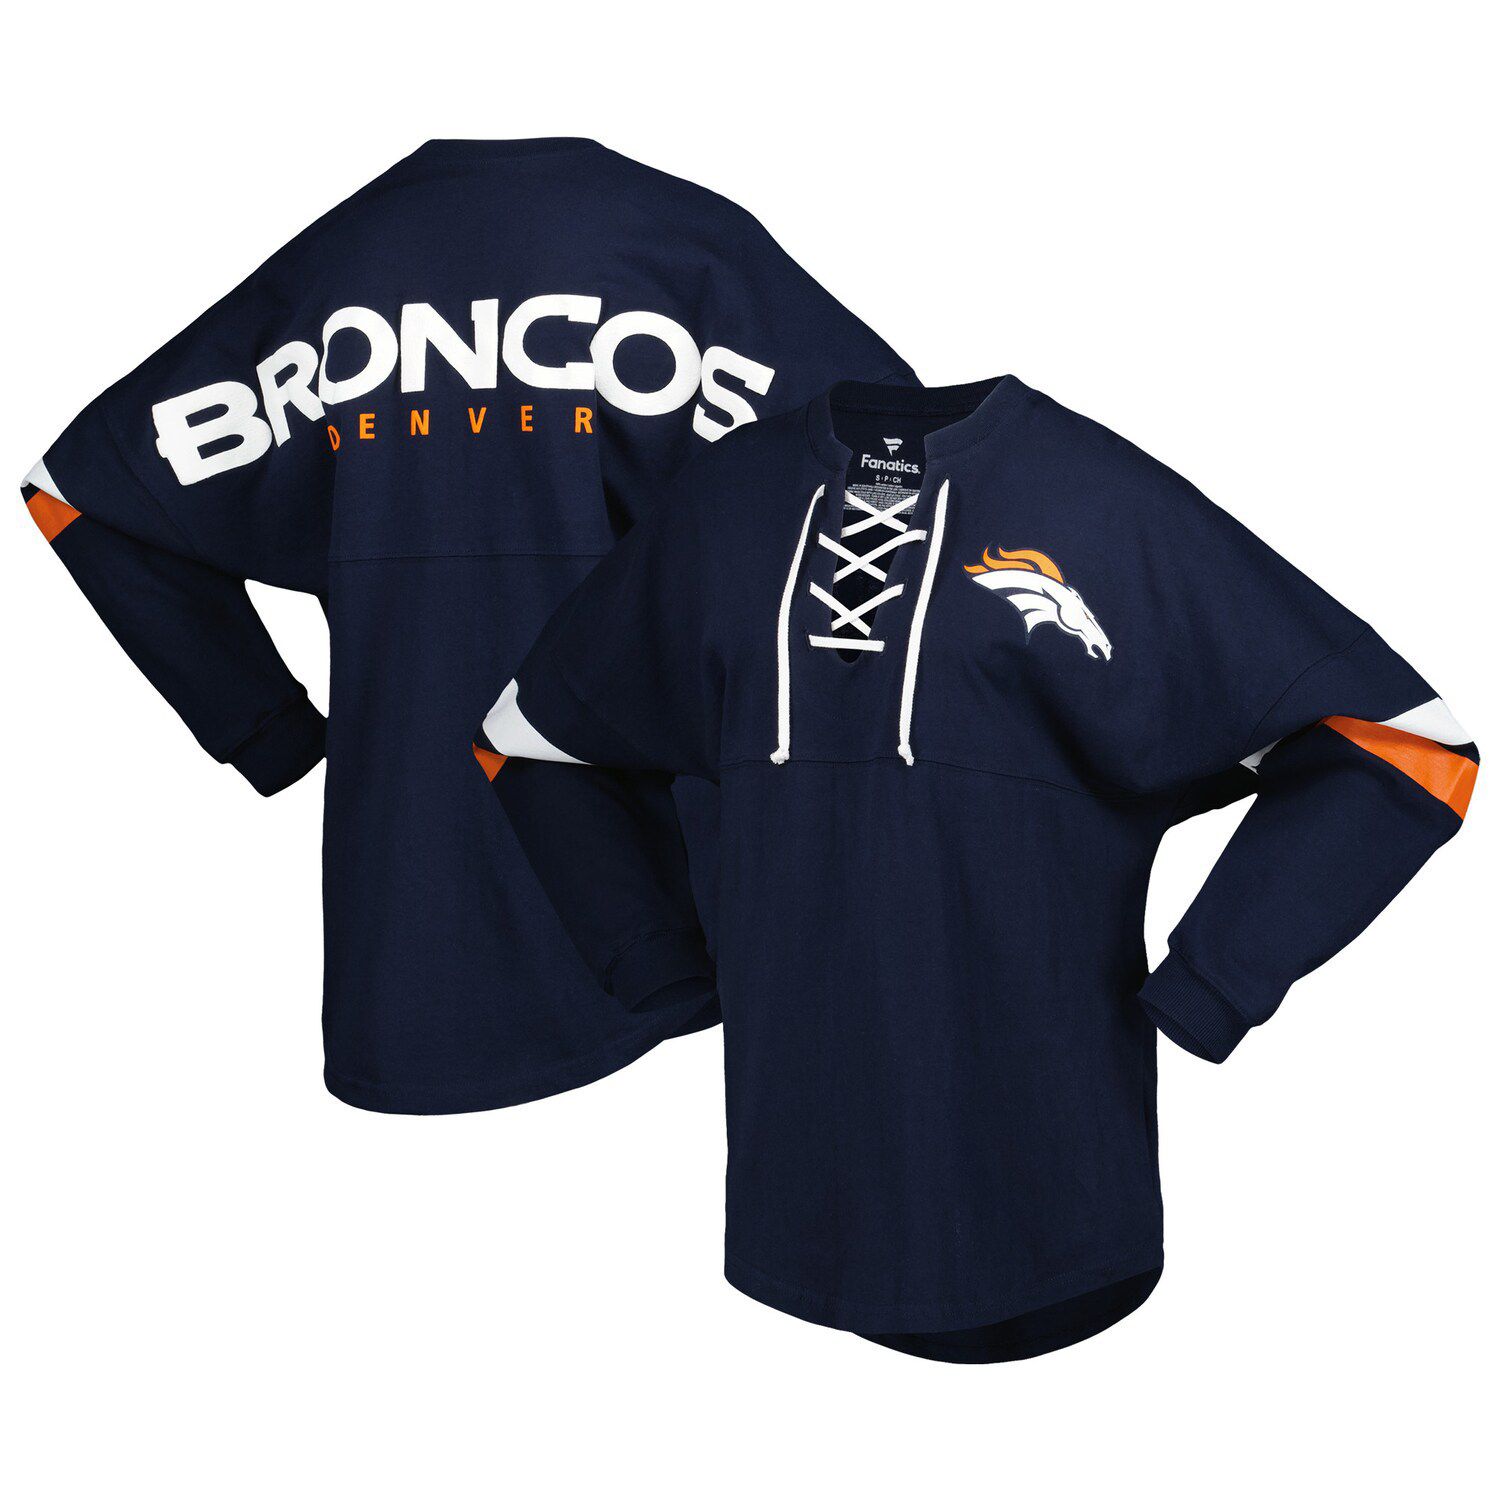 Broncos game day jerseys